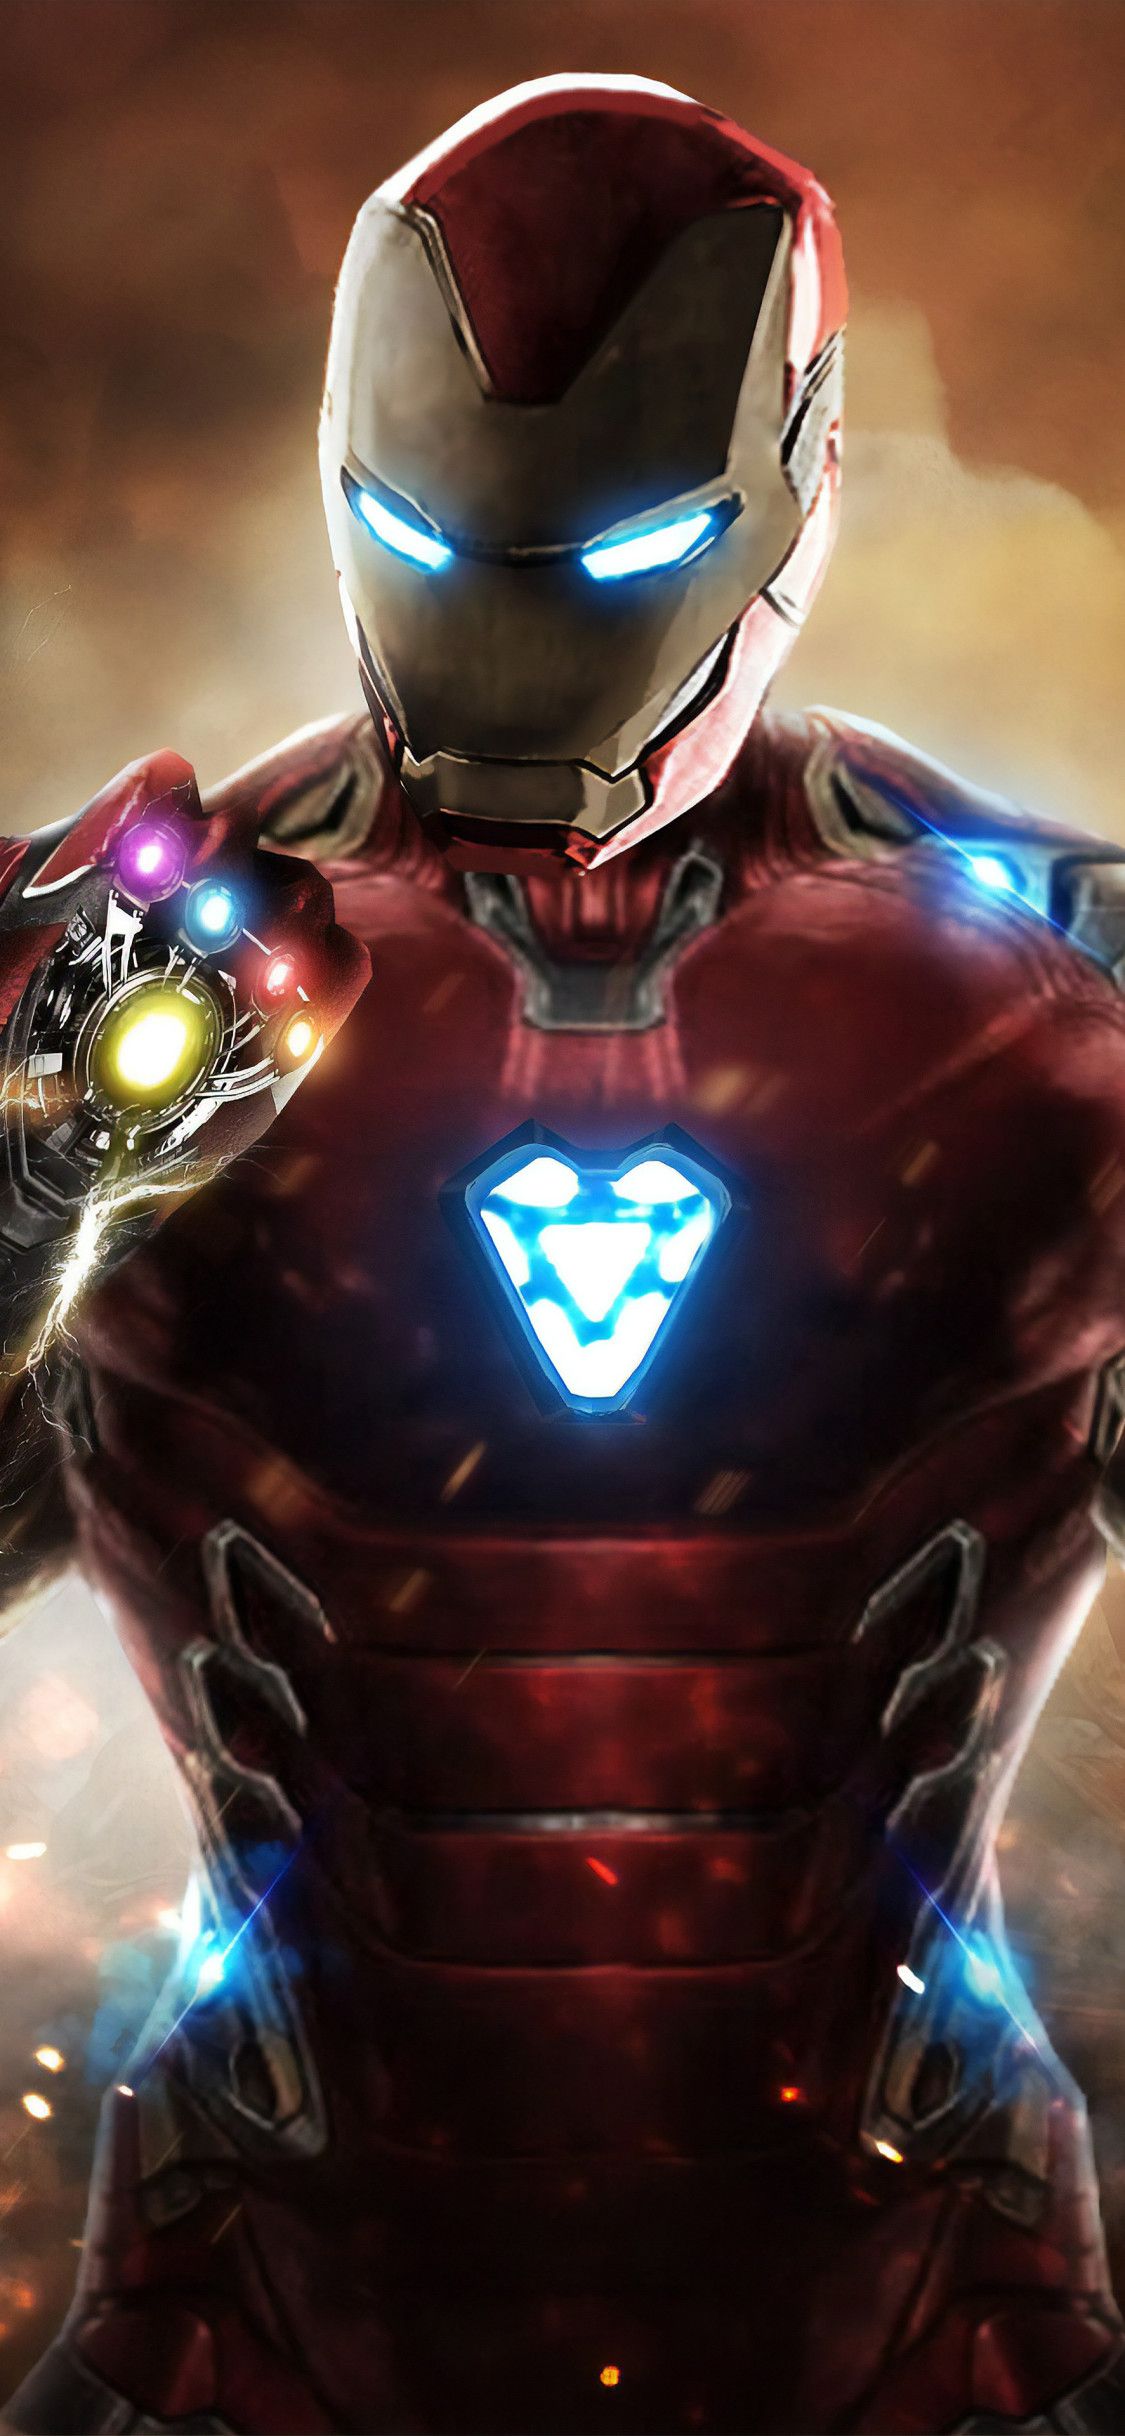 Iron Man Infinity Gauntlet Avengers Endgame iPhone XS